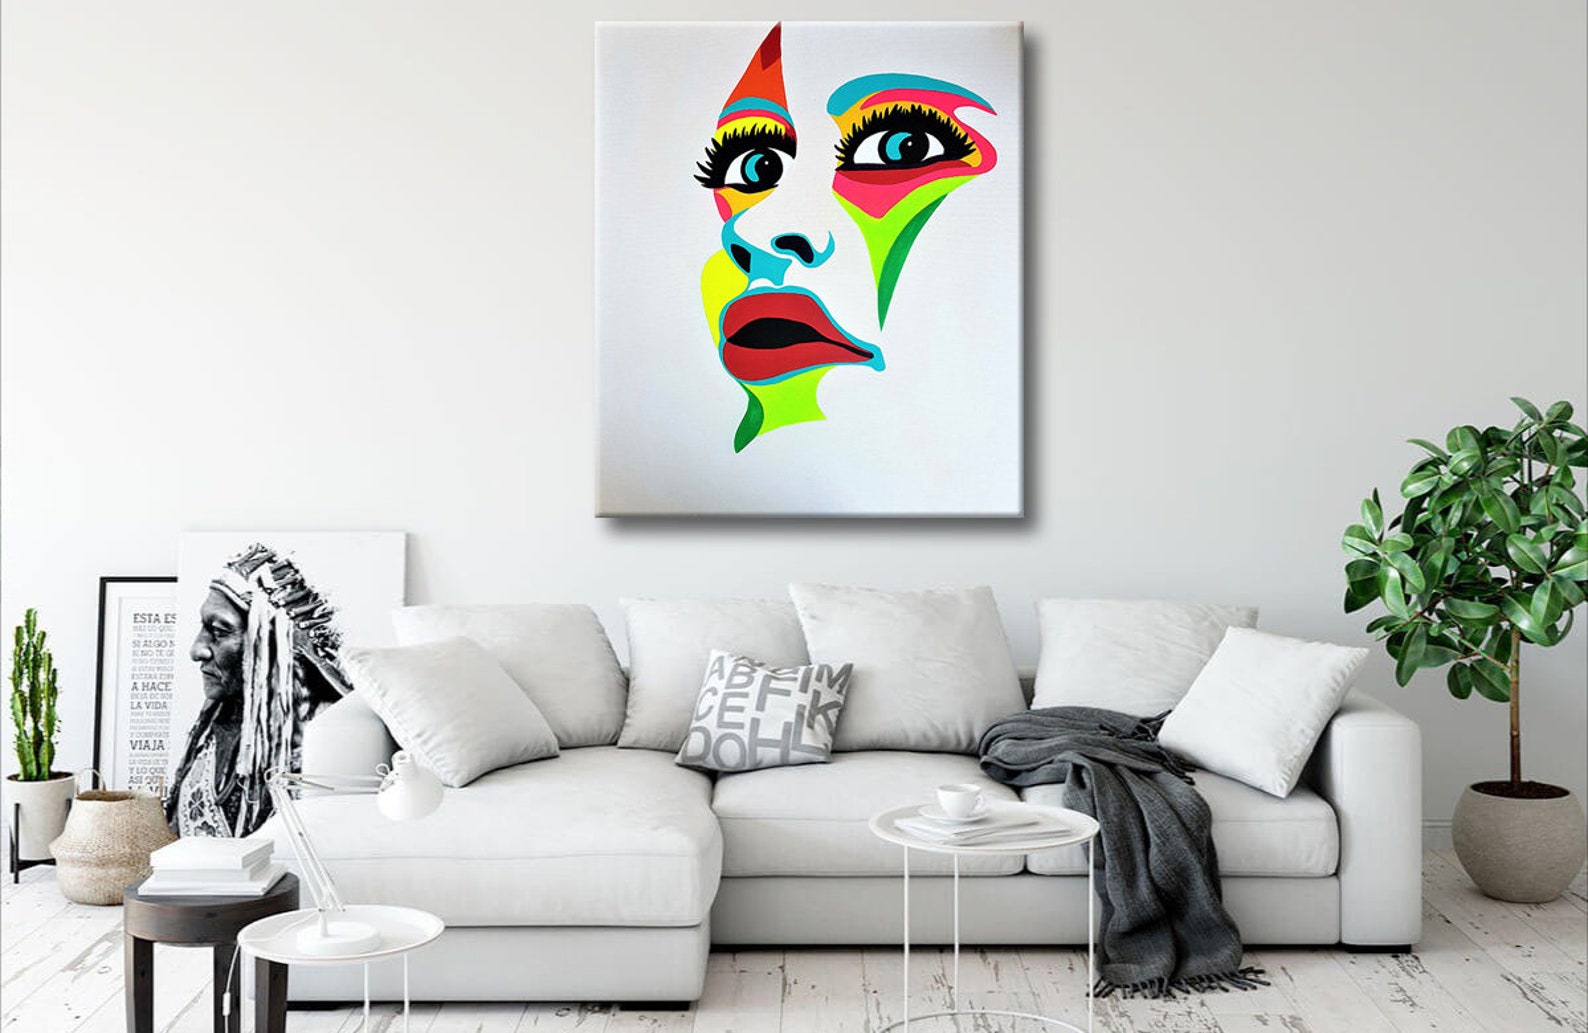 Fluorescent pop art abstract figure painting. Modern vibrant | Etsy